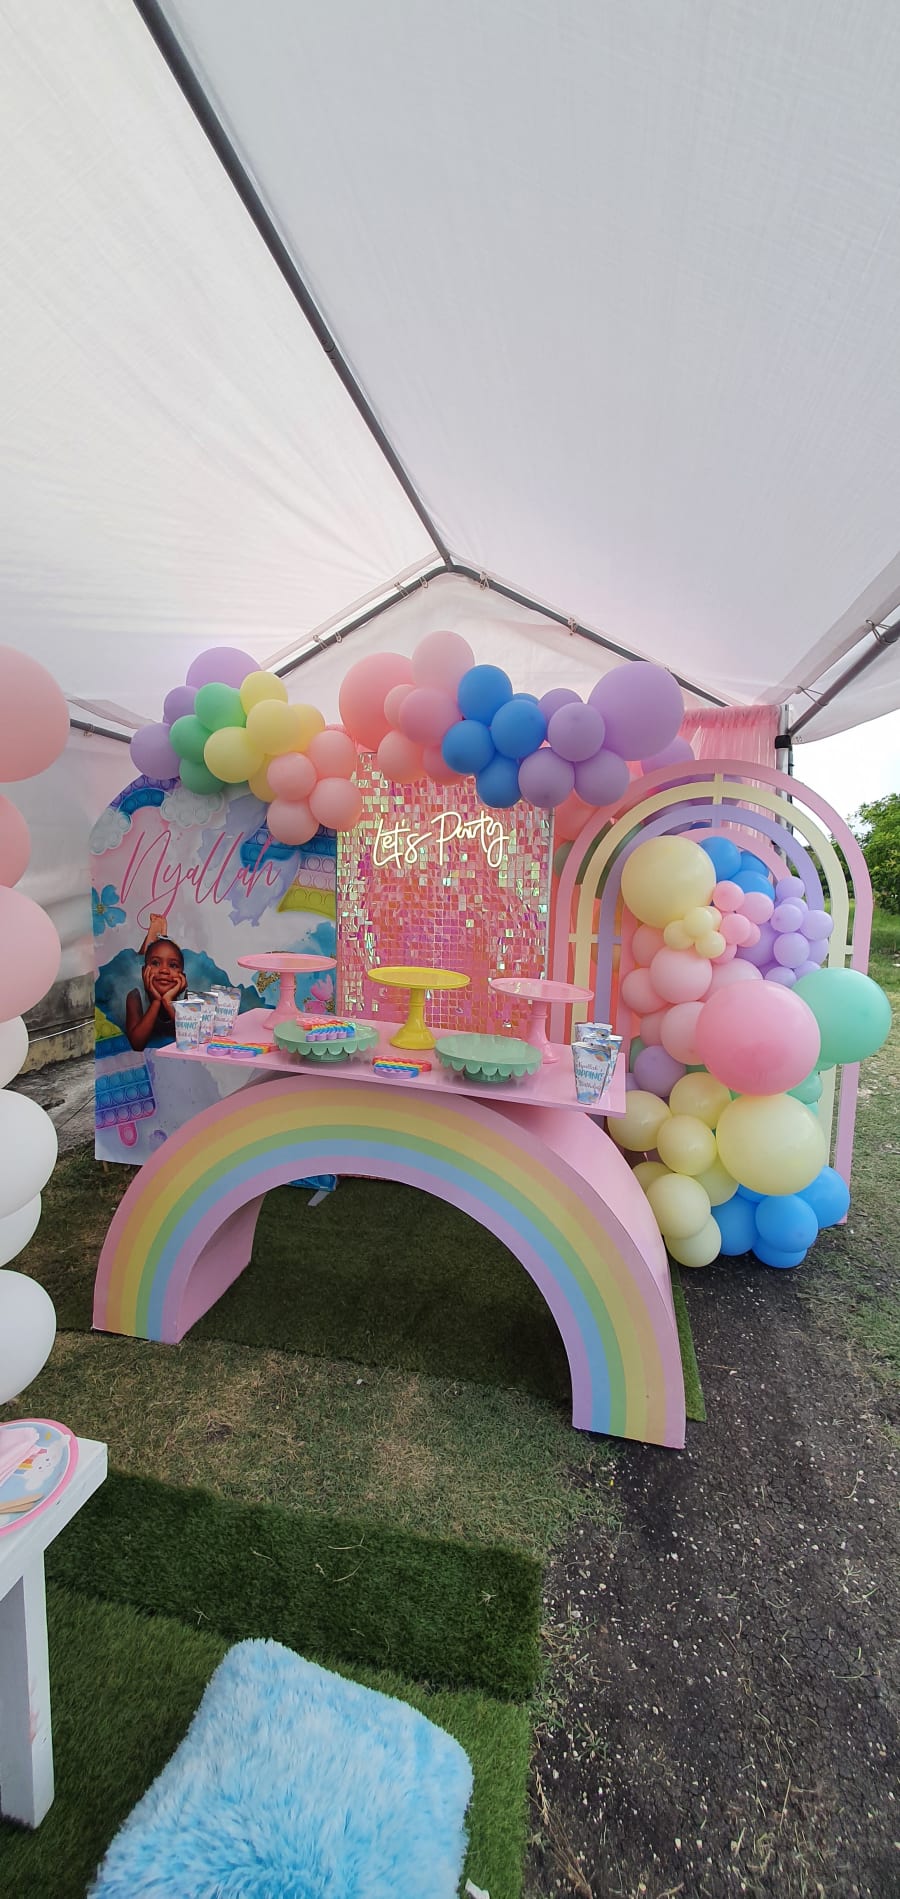 1ft x 1ft Air Sequin Panel Backdrop Square - Pink Lemonade - Bouncy Castle  & Party Rentals in Bridgetown, Barbados